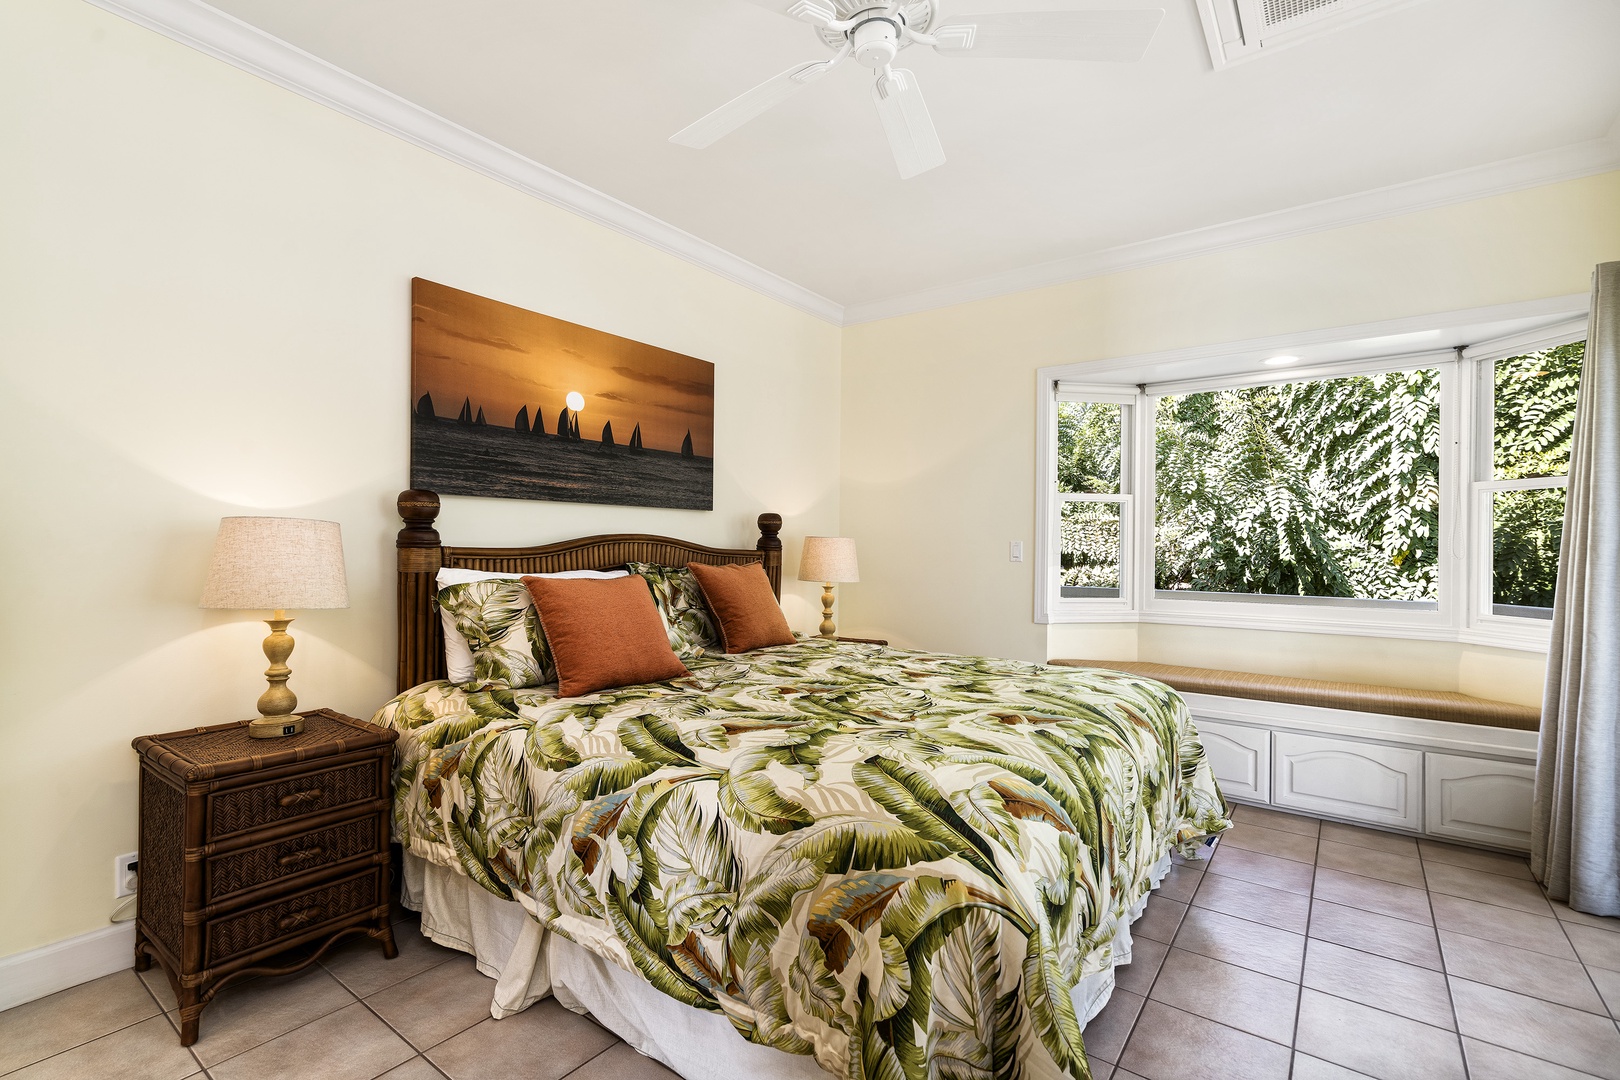 Kailua Kona Vacation Rentals, Dolphin Manor - Upstairs 348 sqft guest bedroom (room 4)